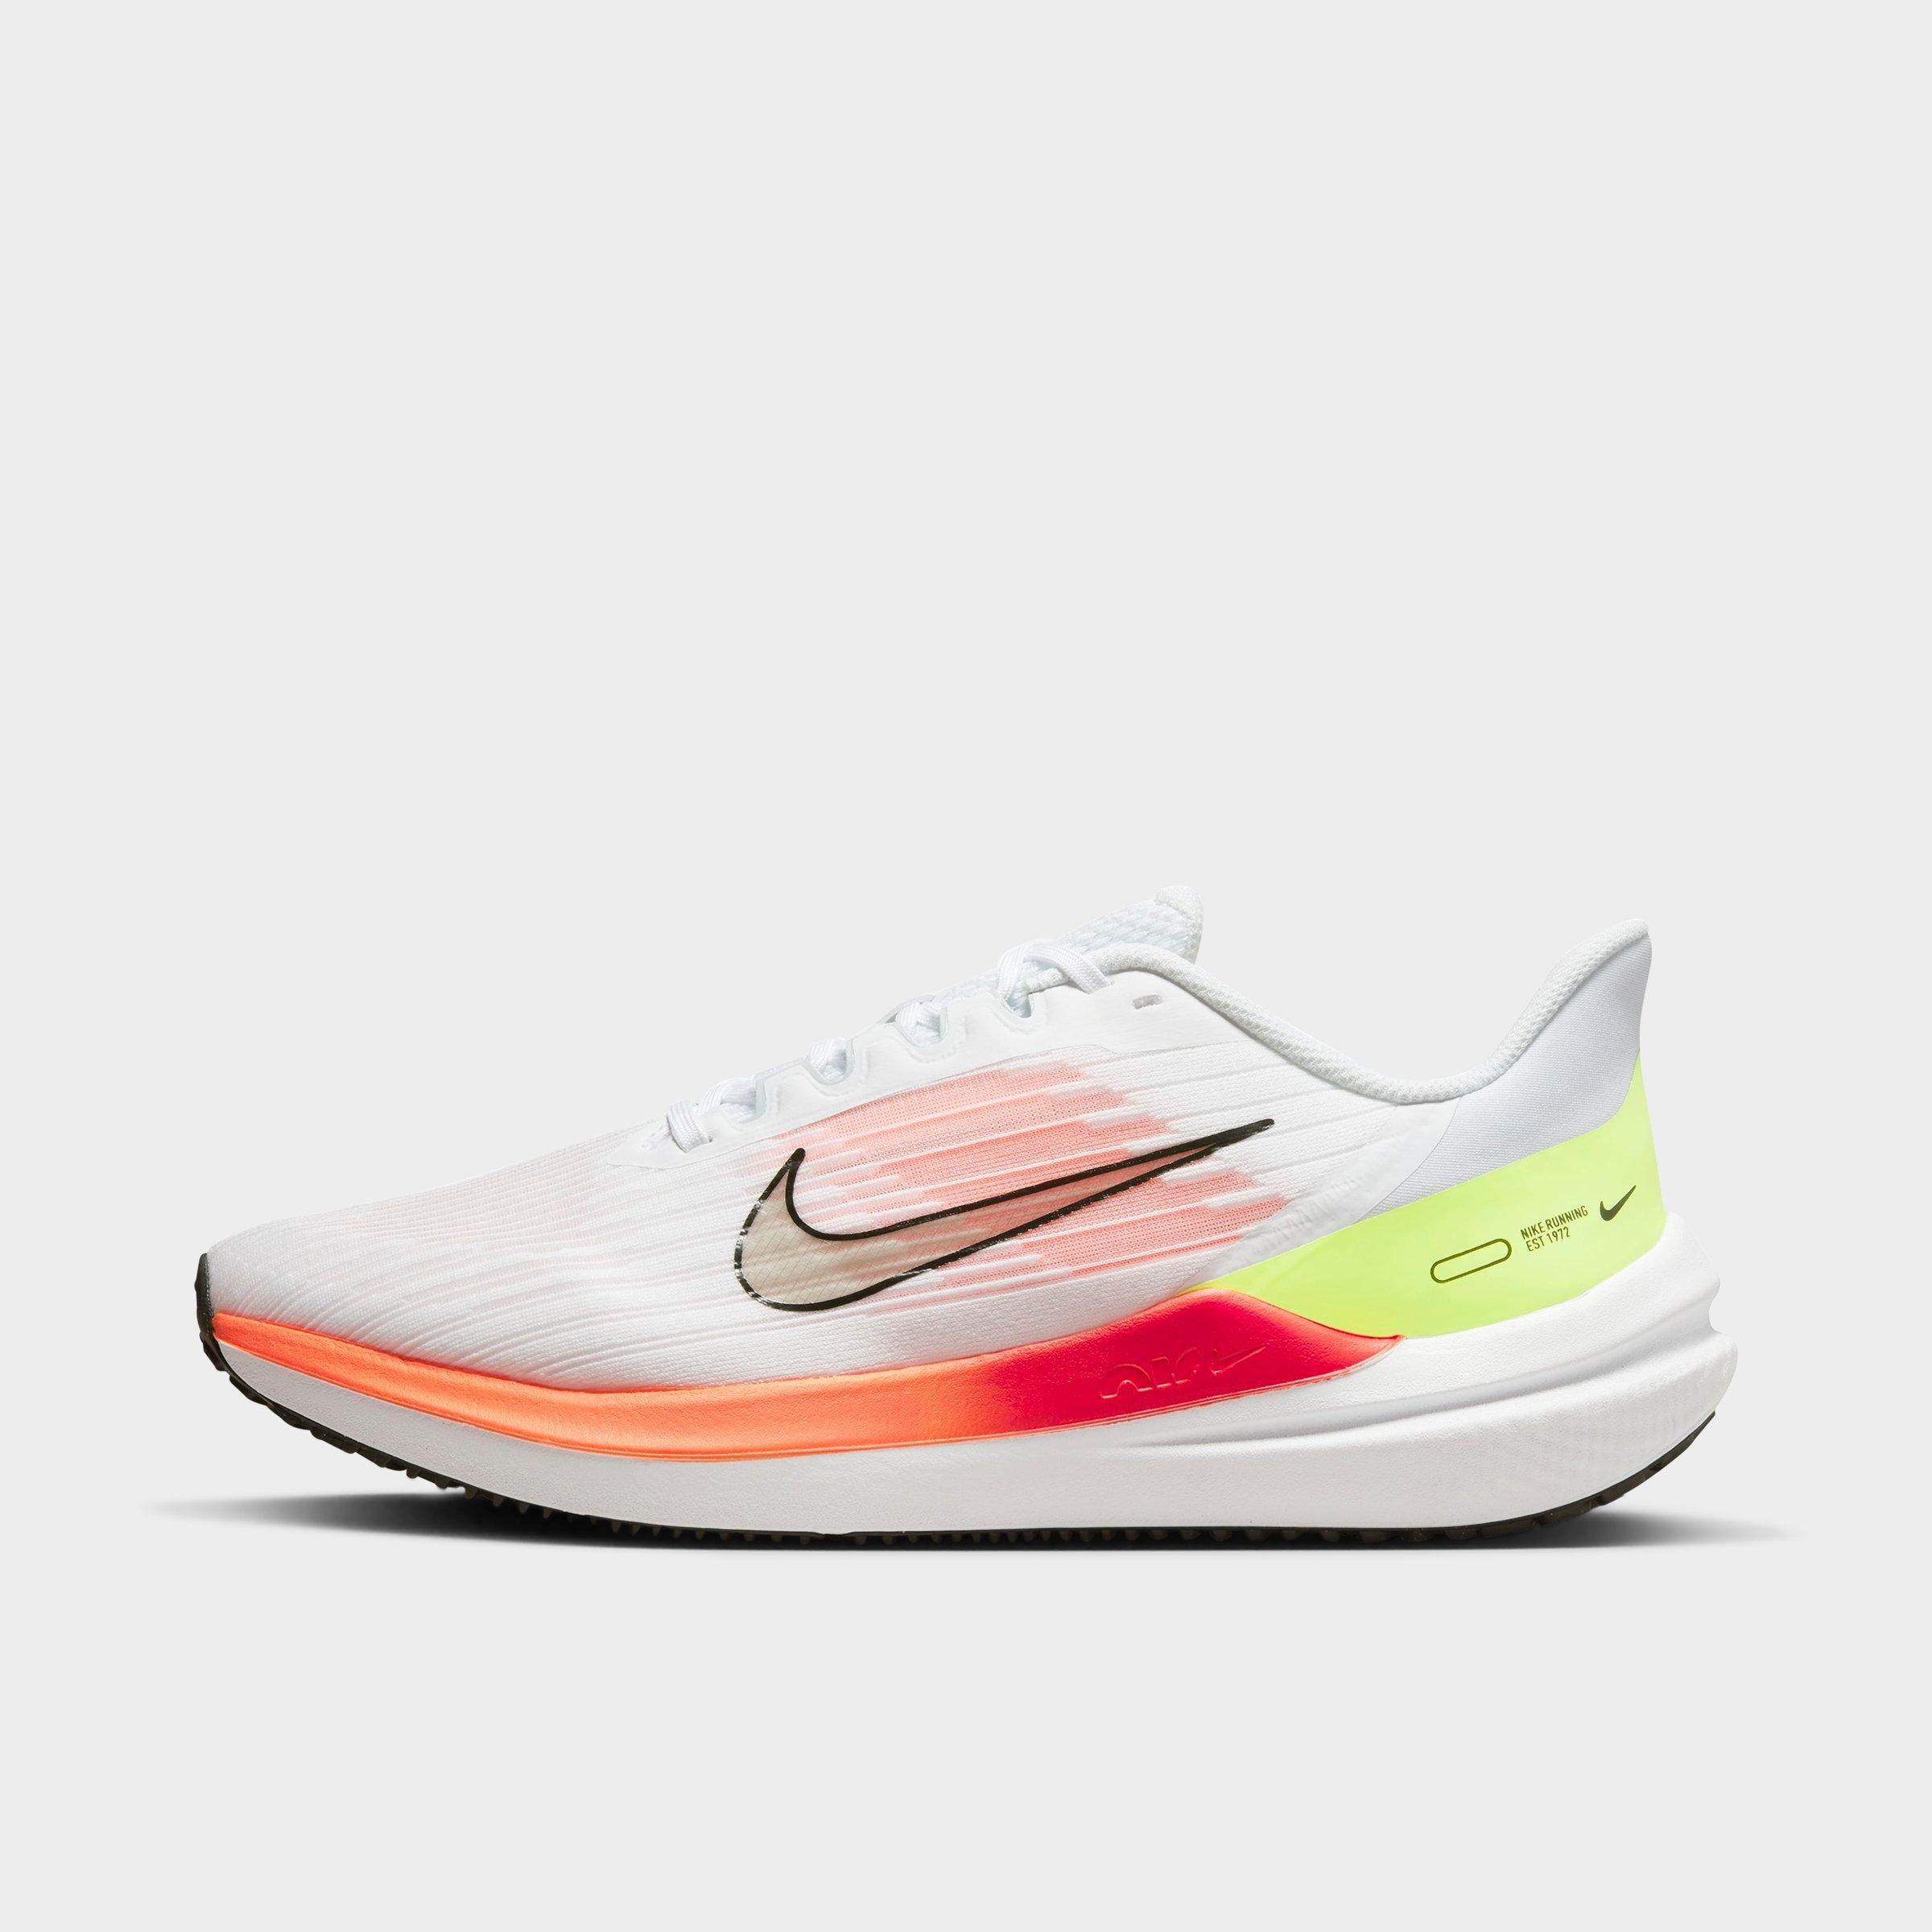 Men's Nike Air Winflo 9 Running Shoes